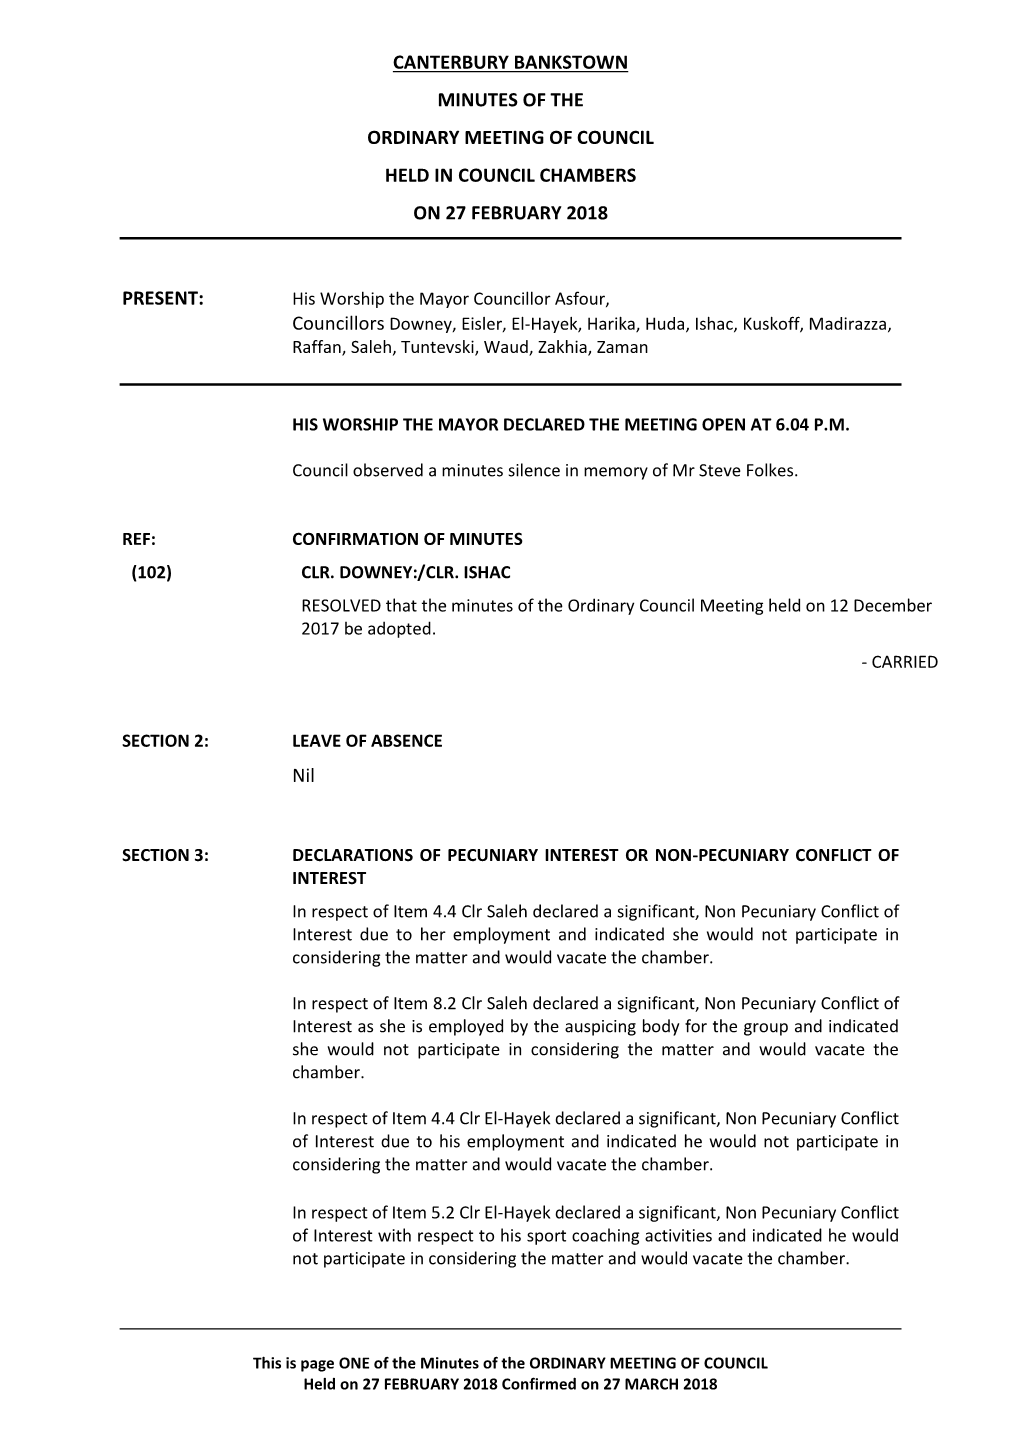 Council Minutes 27 February 2018 PDF (213.79